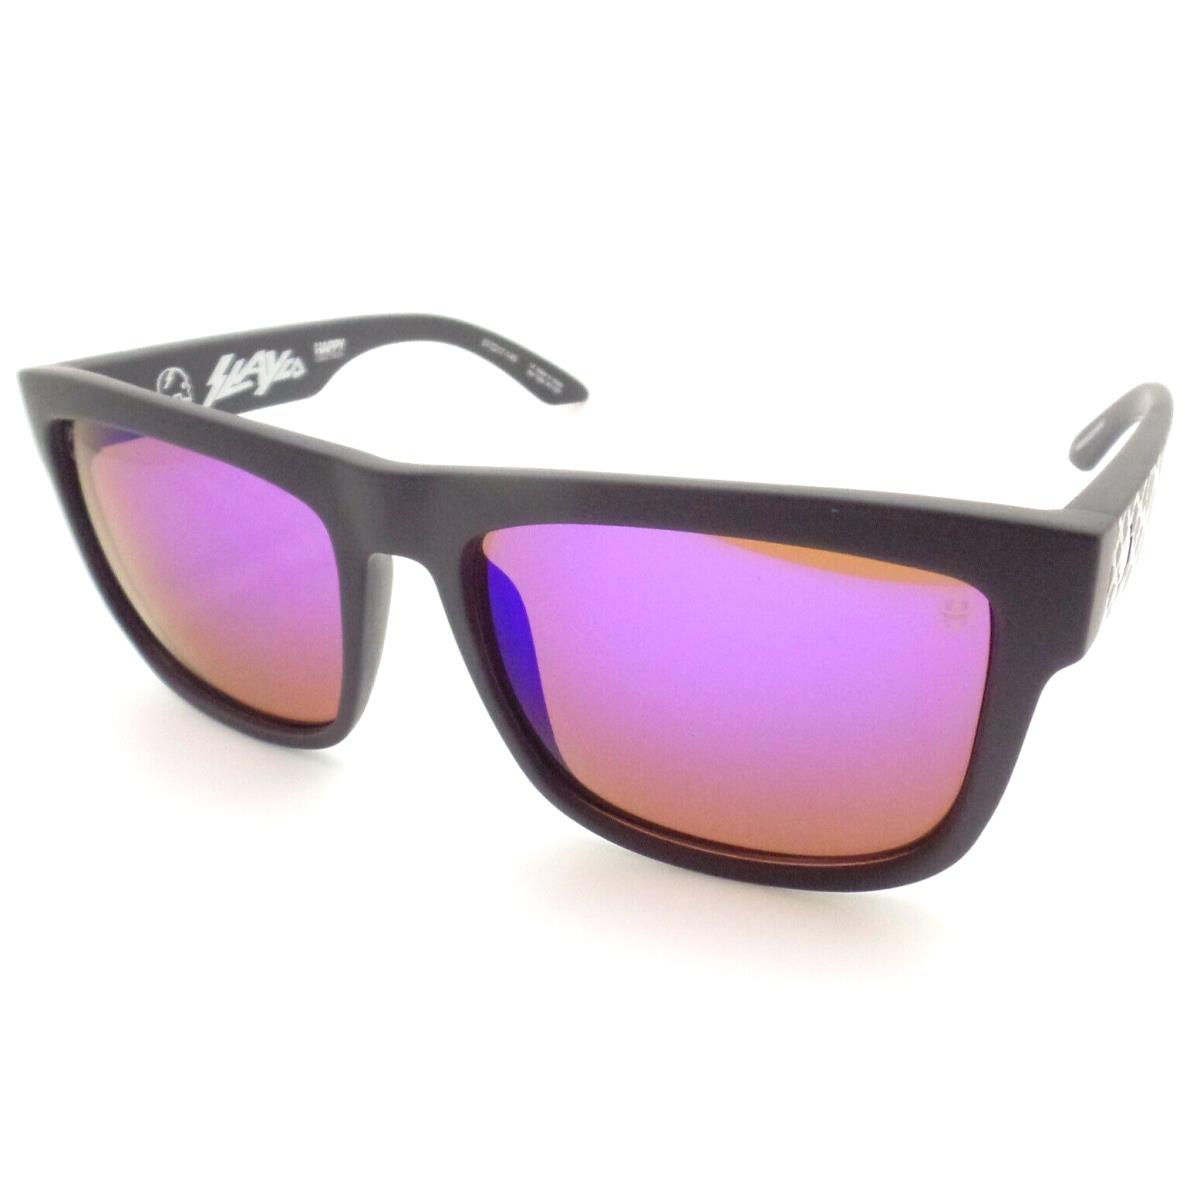 Spy Optics Discord Slayco Matte Black Viper Purple Sunglasses - Frame: Slayco Matte Black Viper, Lens: Bronze Purple Spectra